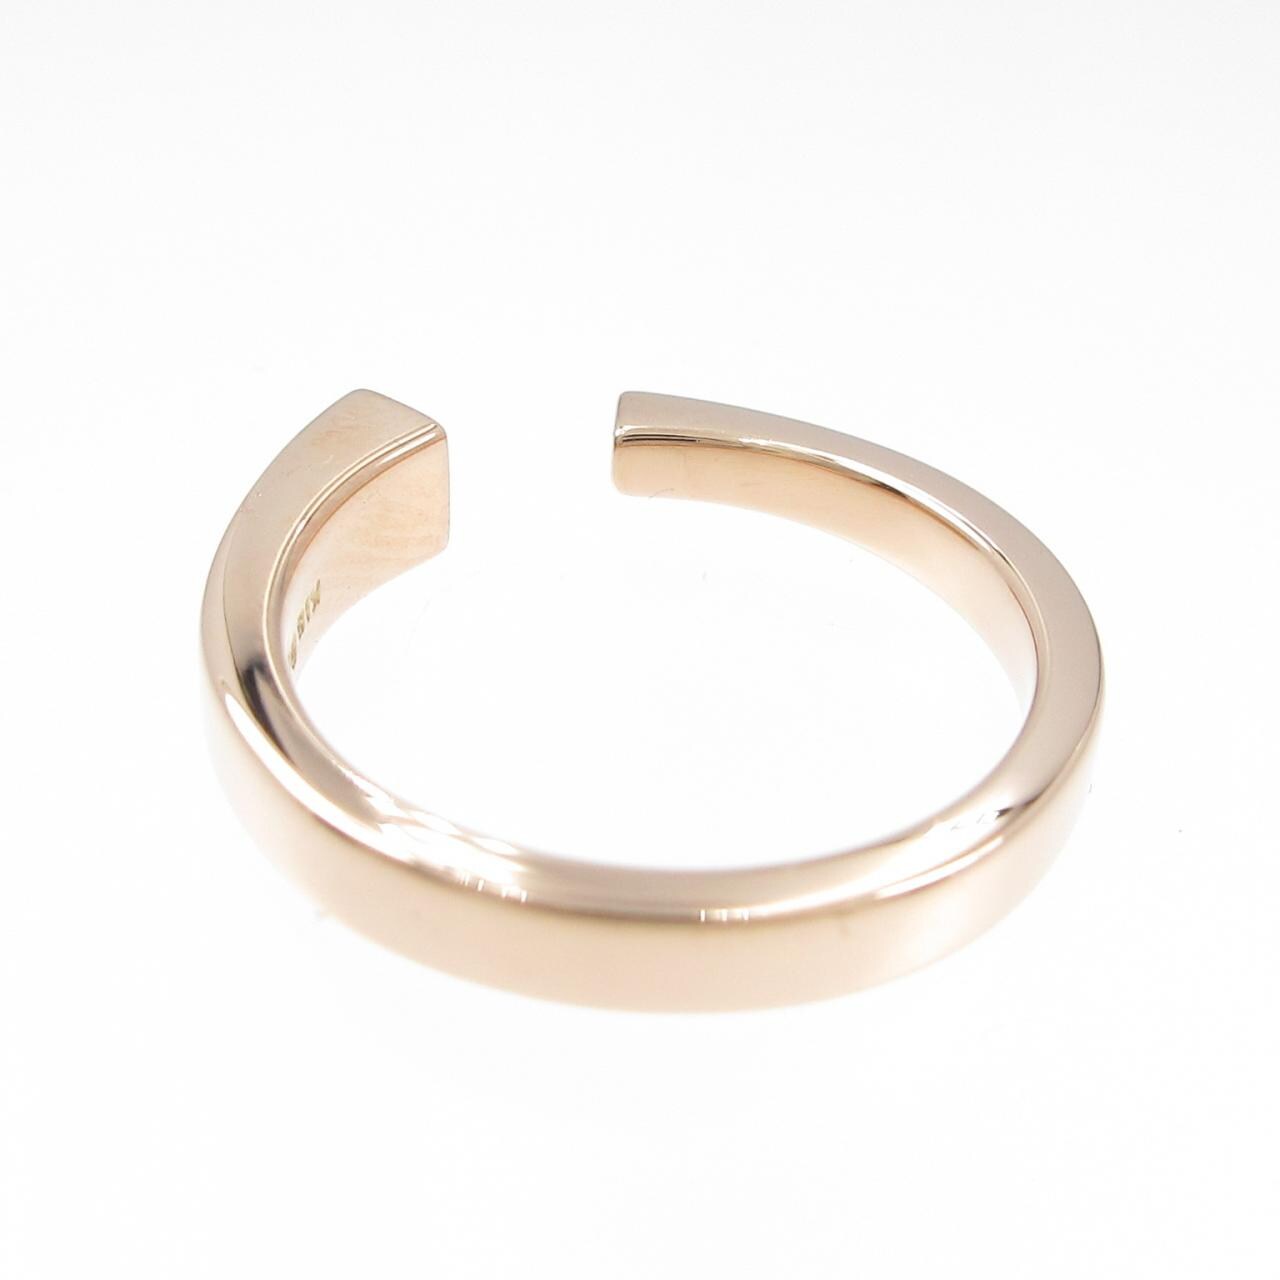 KOMEHYO|Ete K18PG Ring|Ete|Brand Jewelry|Ring|【Official】KOMEHYO